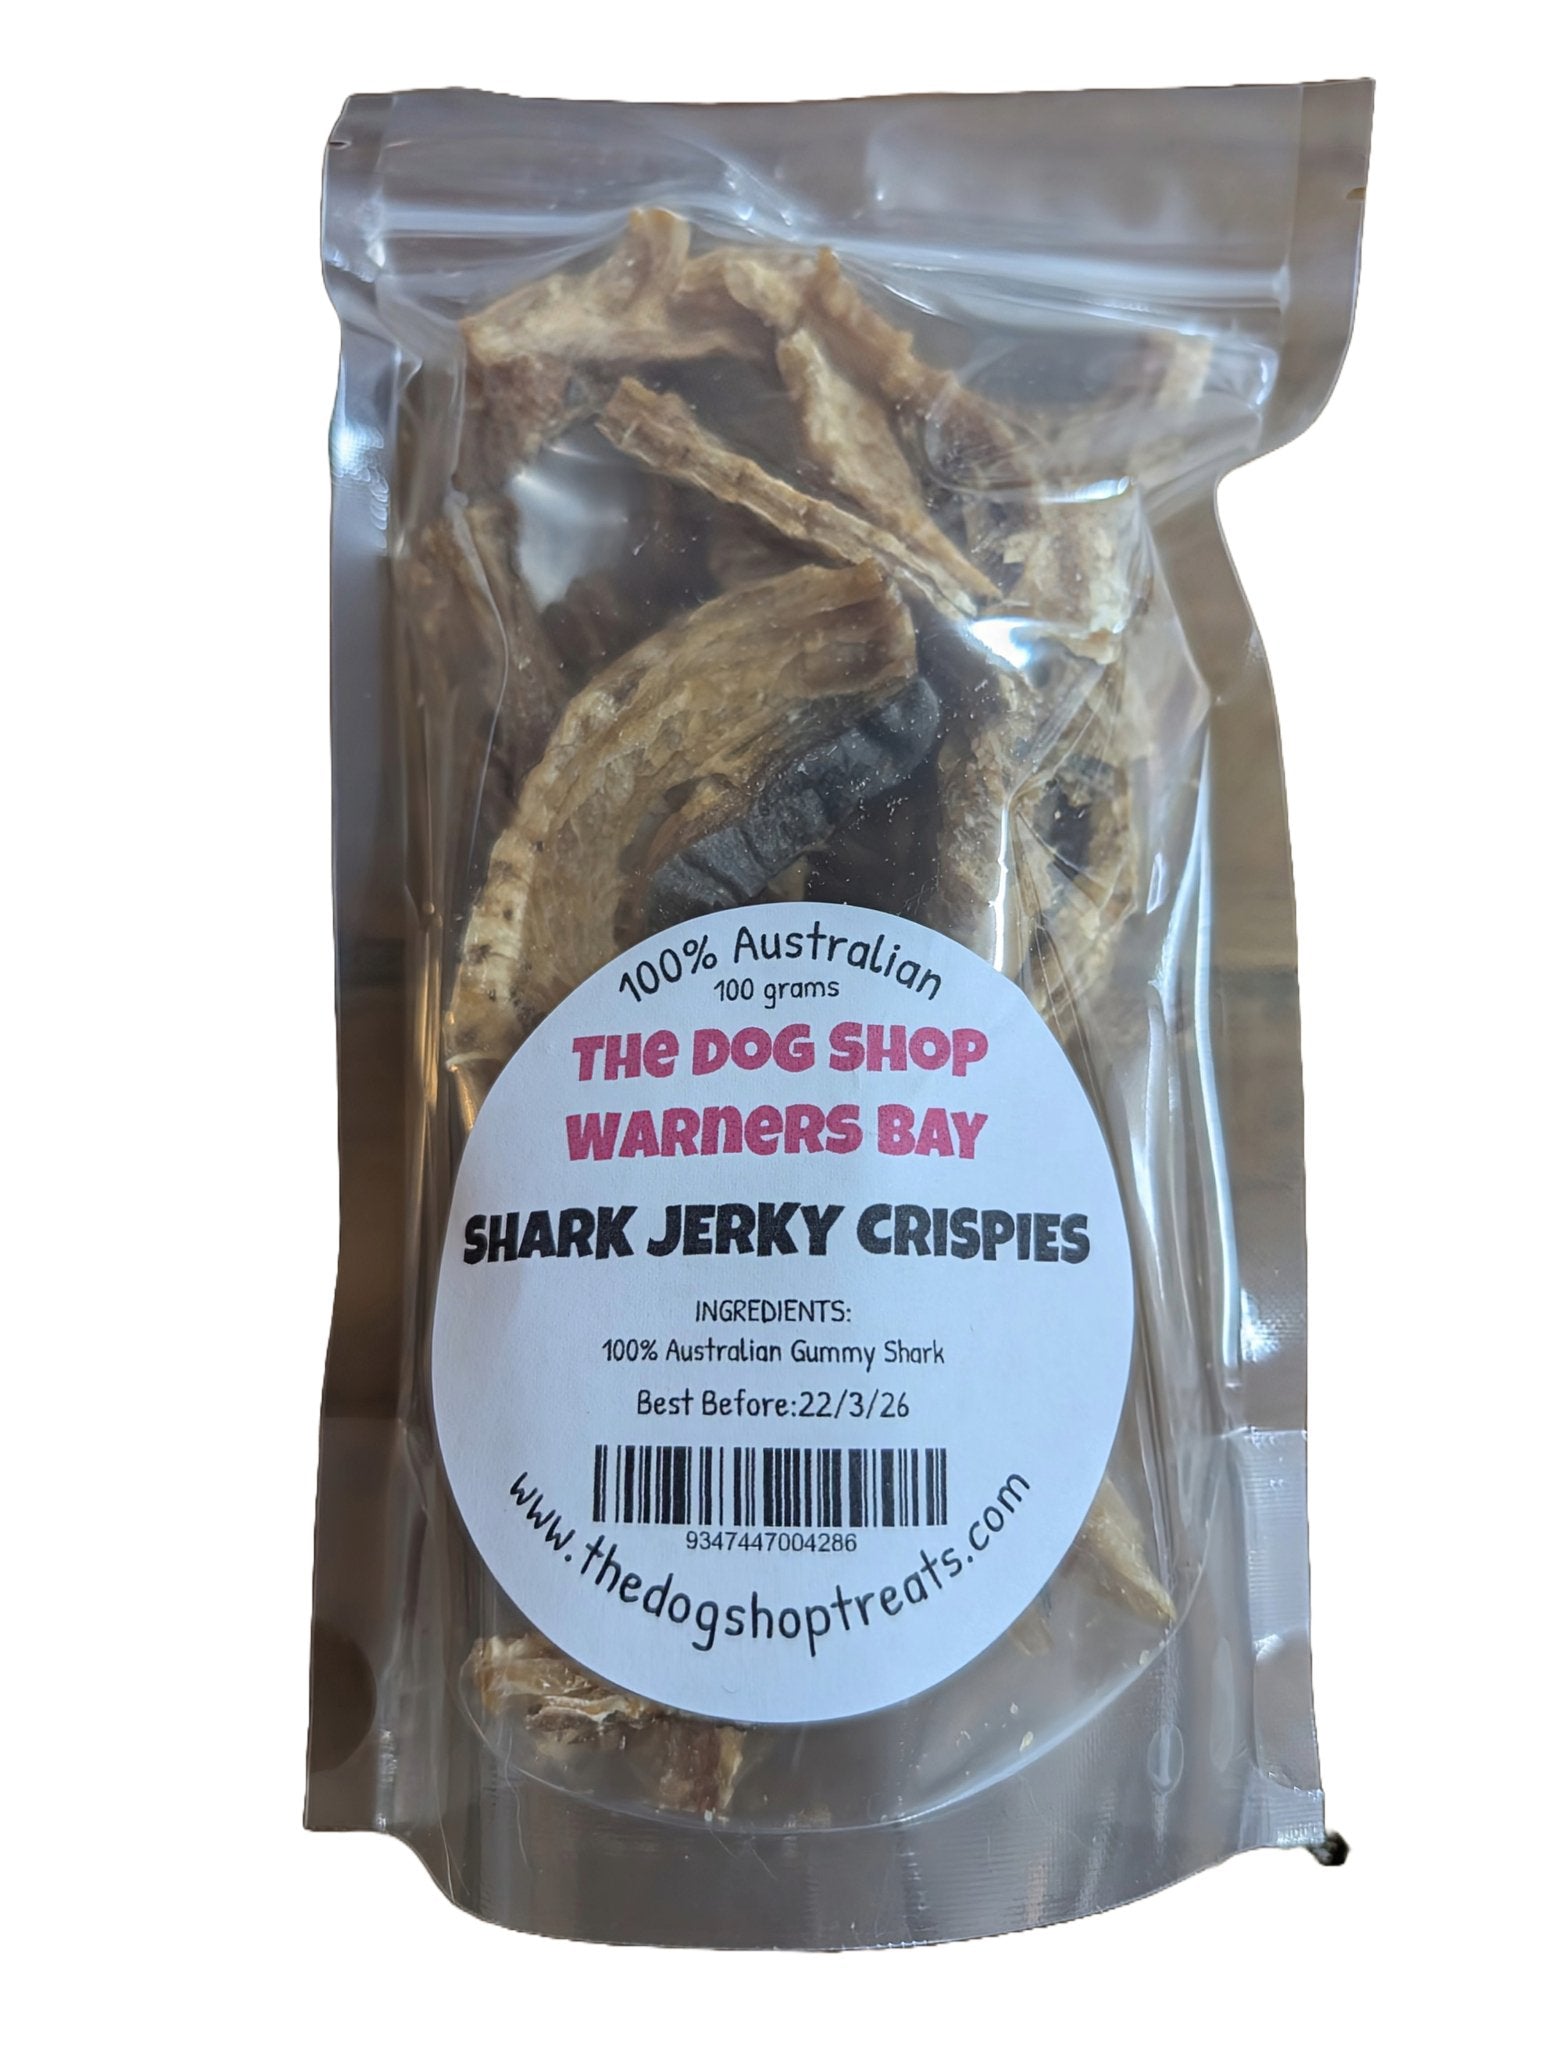 Shark Jerky Crispies - The Dog Shop Warners Bay